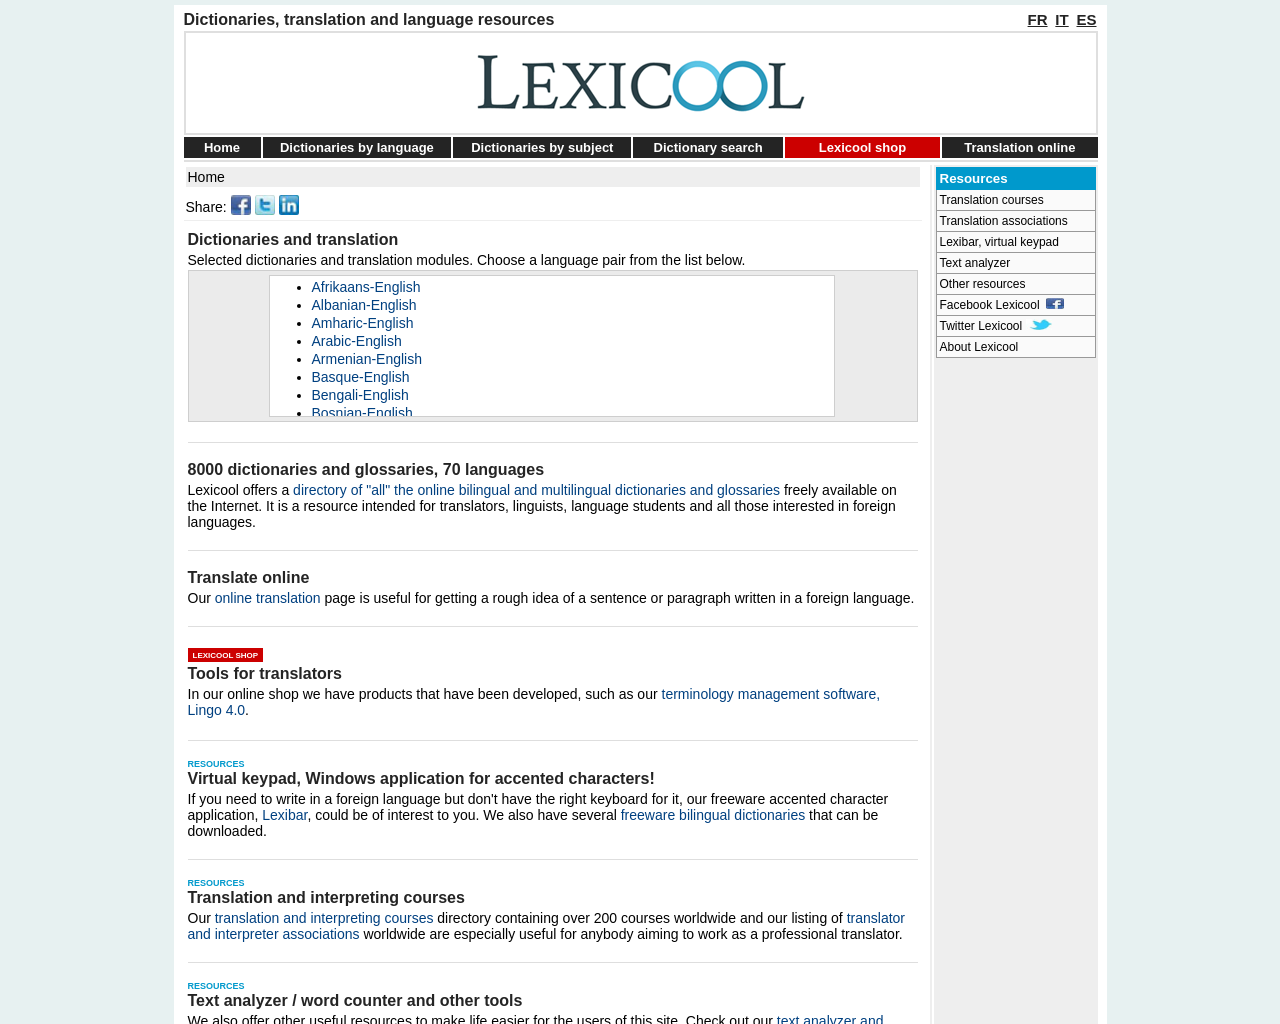 www.lexicool.com